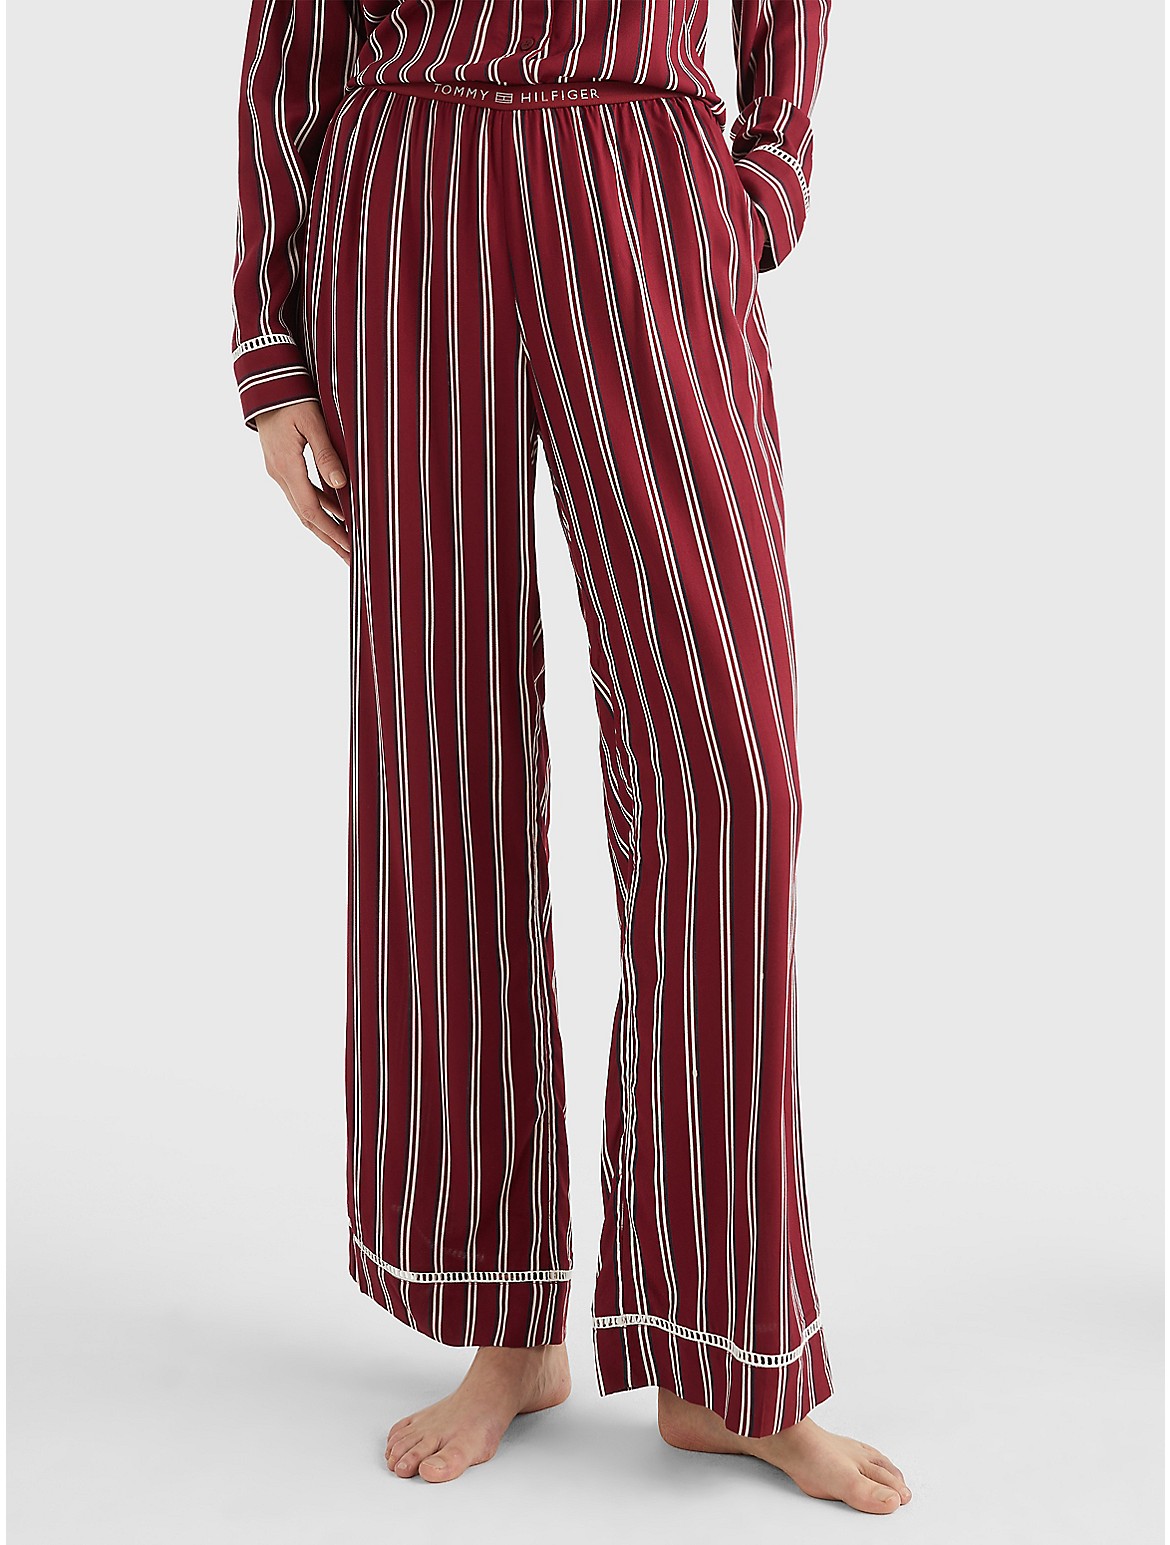 Tommy Hilfiger Women's Stripe Pajama Pant - Red - L